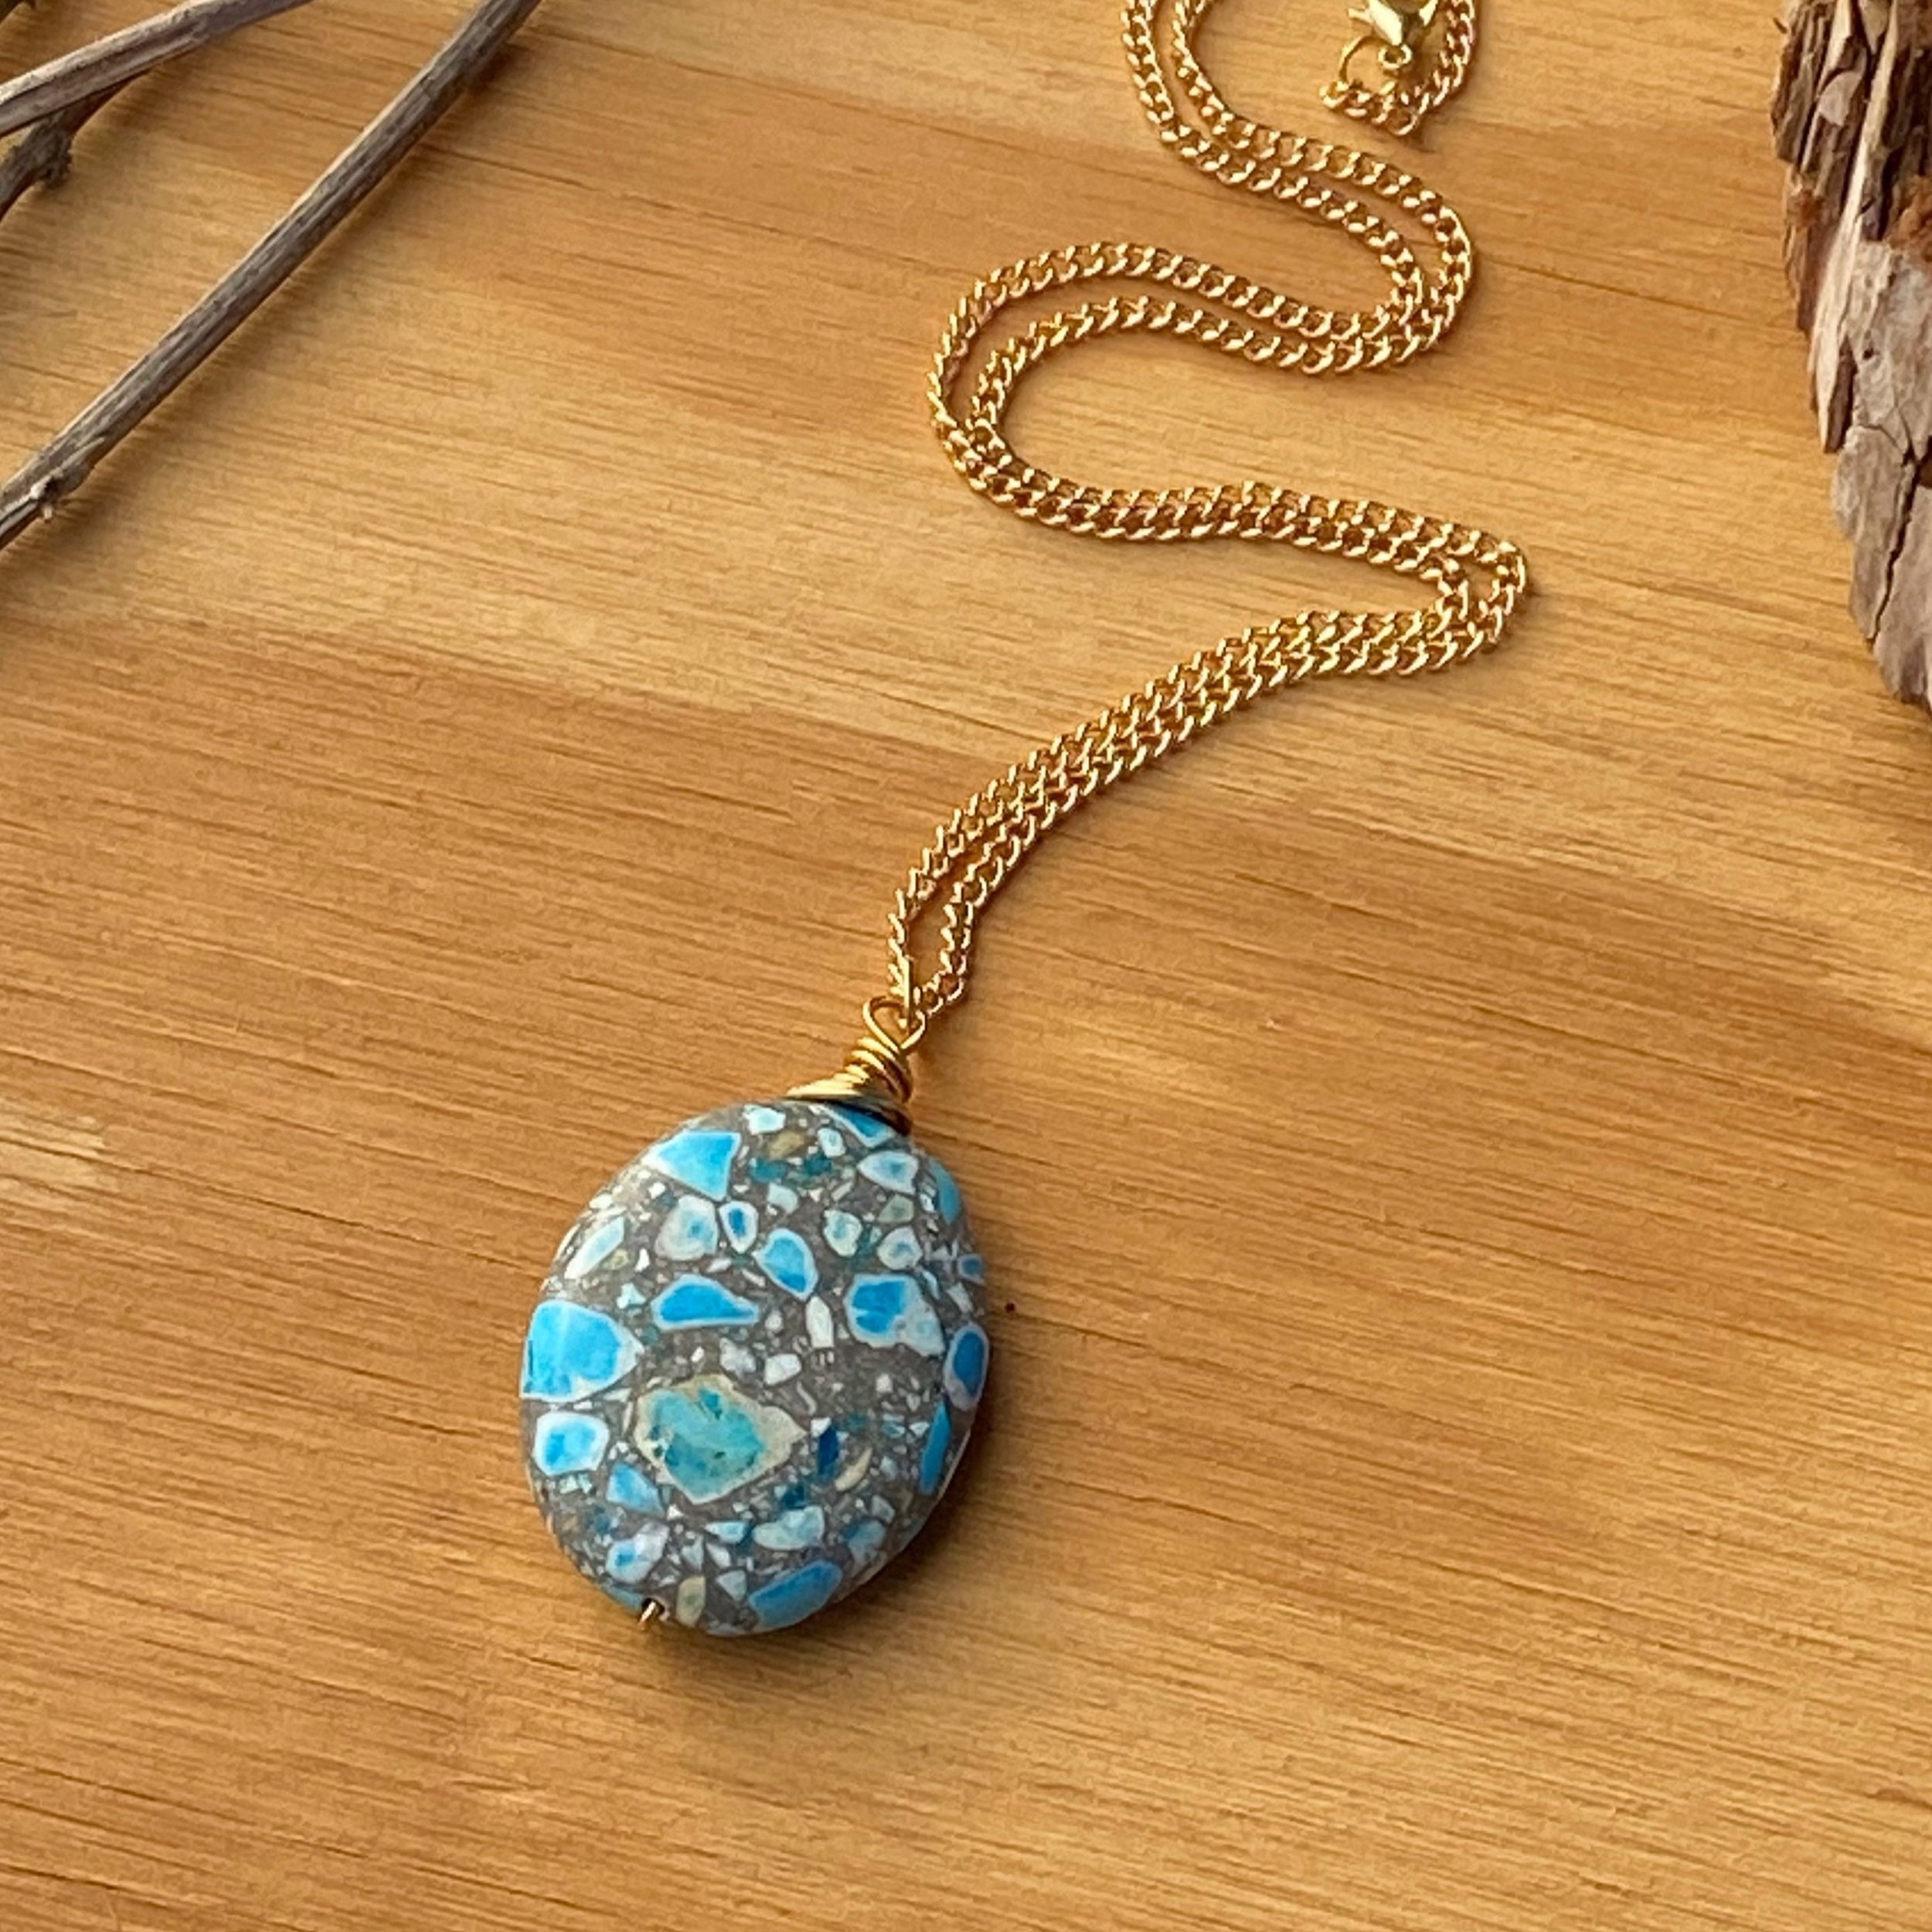 Natural thick flat wide hemp necklace with five jasper gem beads